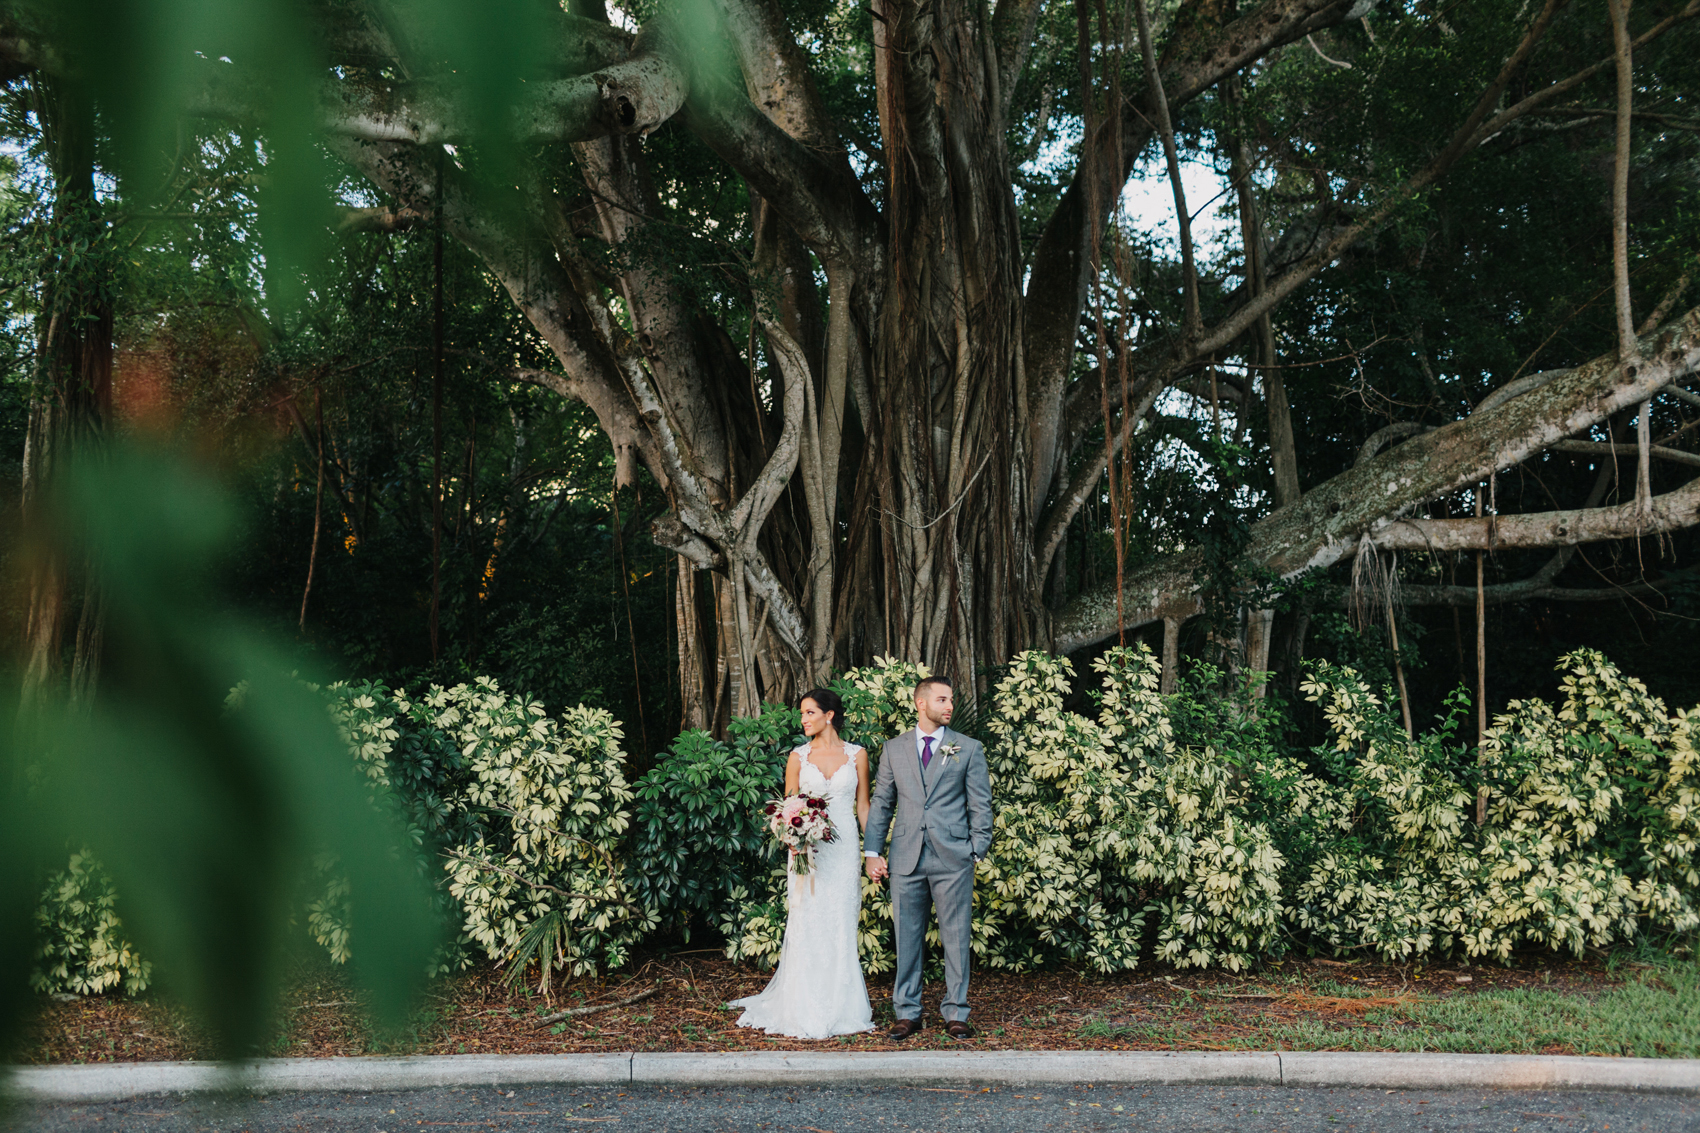 Wedding photos under the banyan trees at the historic Powel Crosley Estate